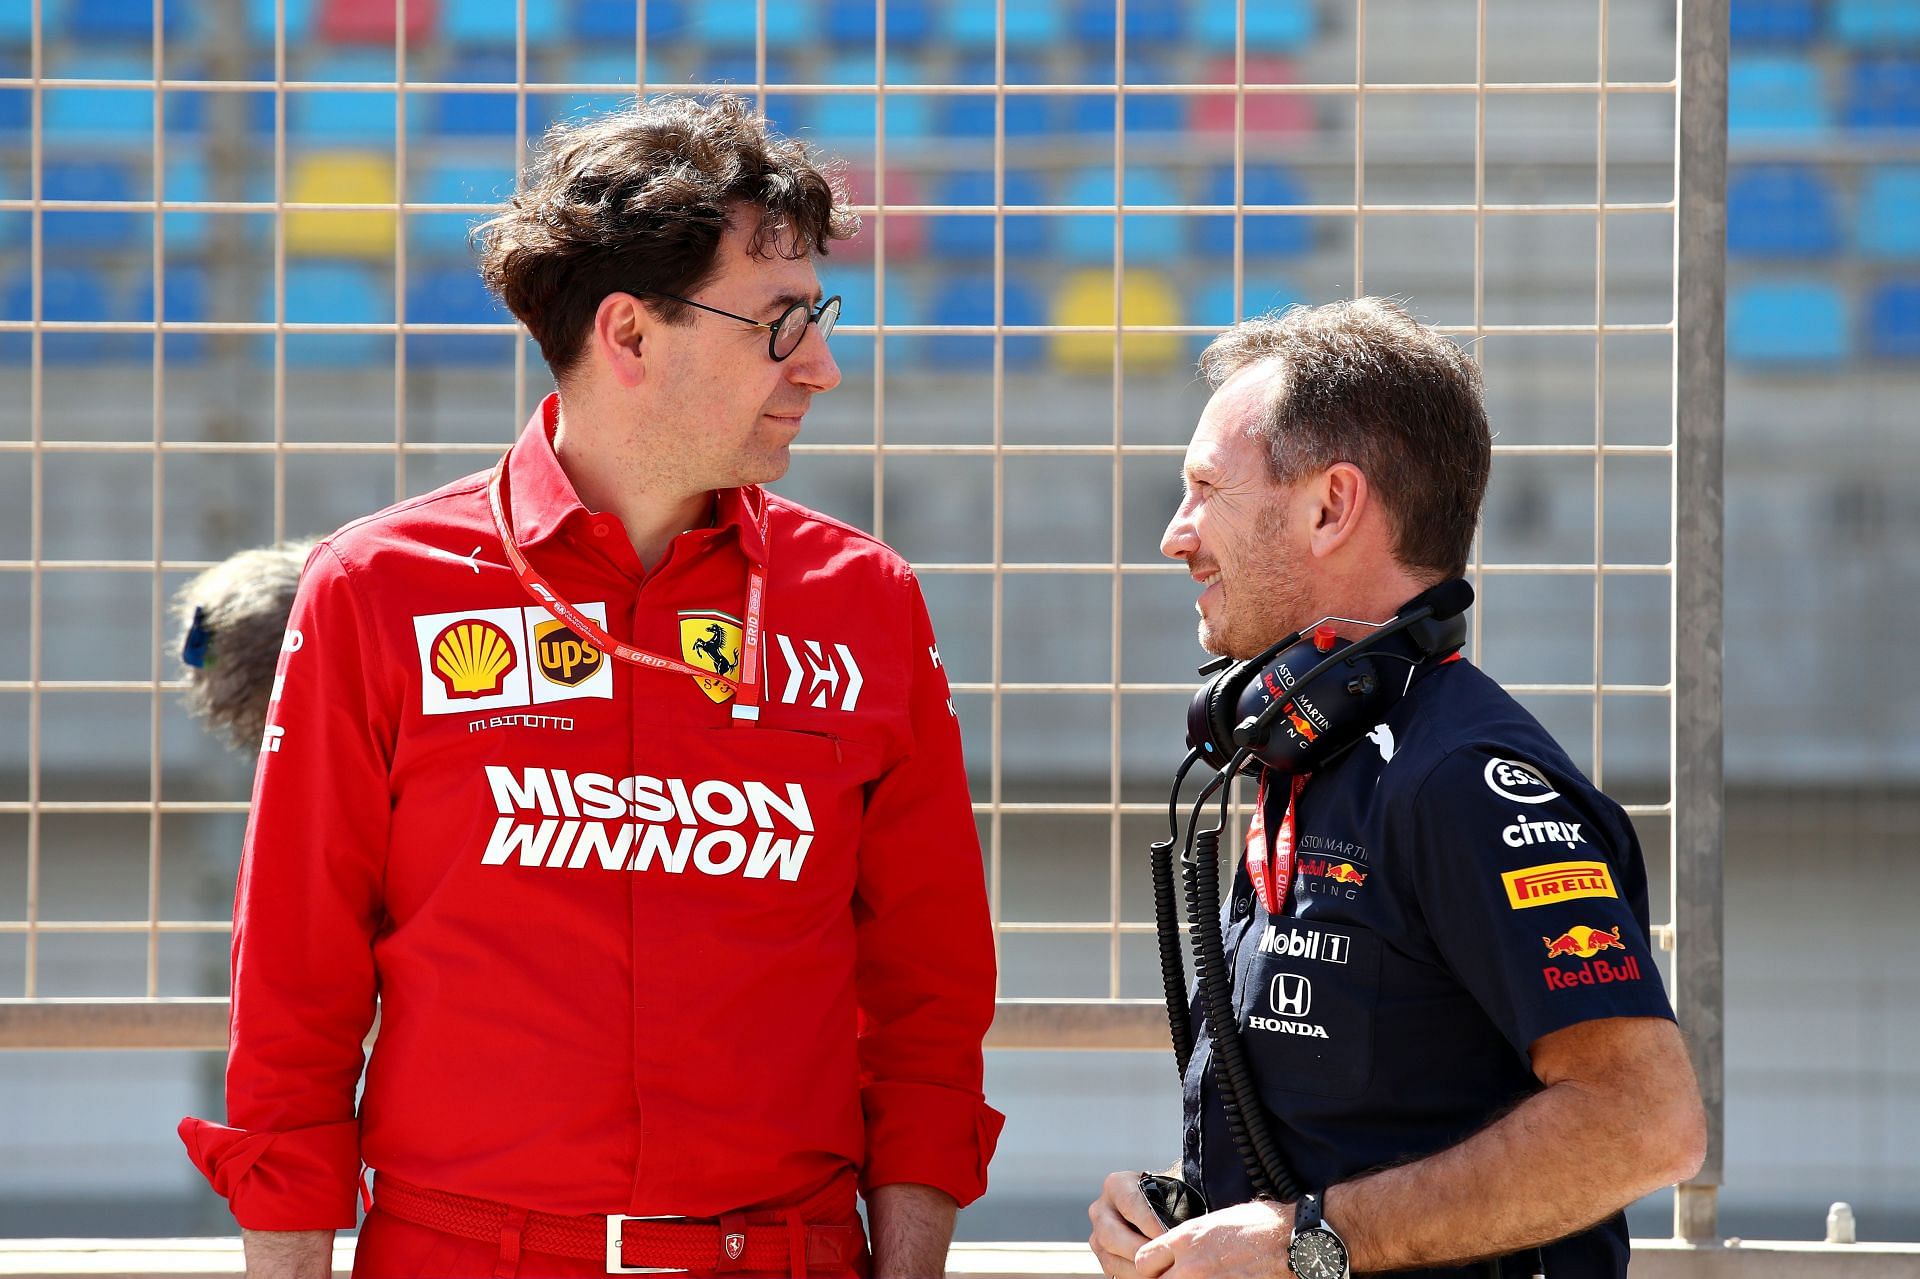 Red Bull team principal Christian Horner speaks with Ferrari team principal Mattia Binotto ahead of the 2019 Bahrain Grand Prix